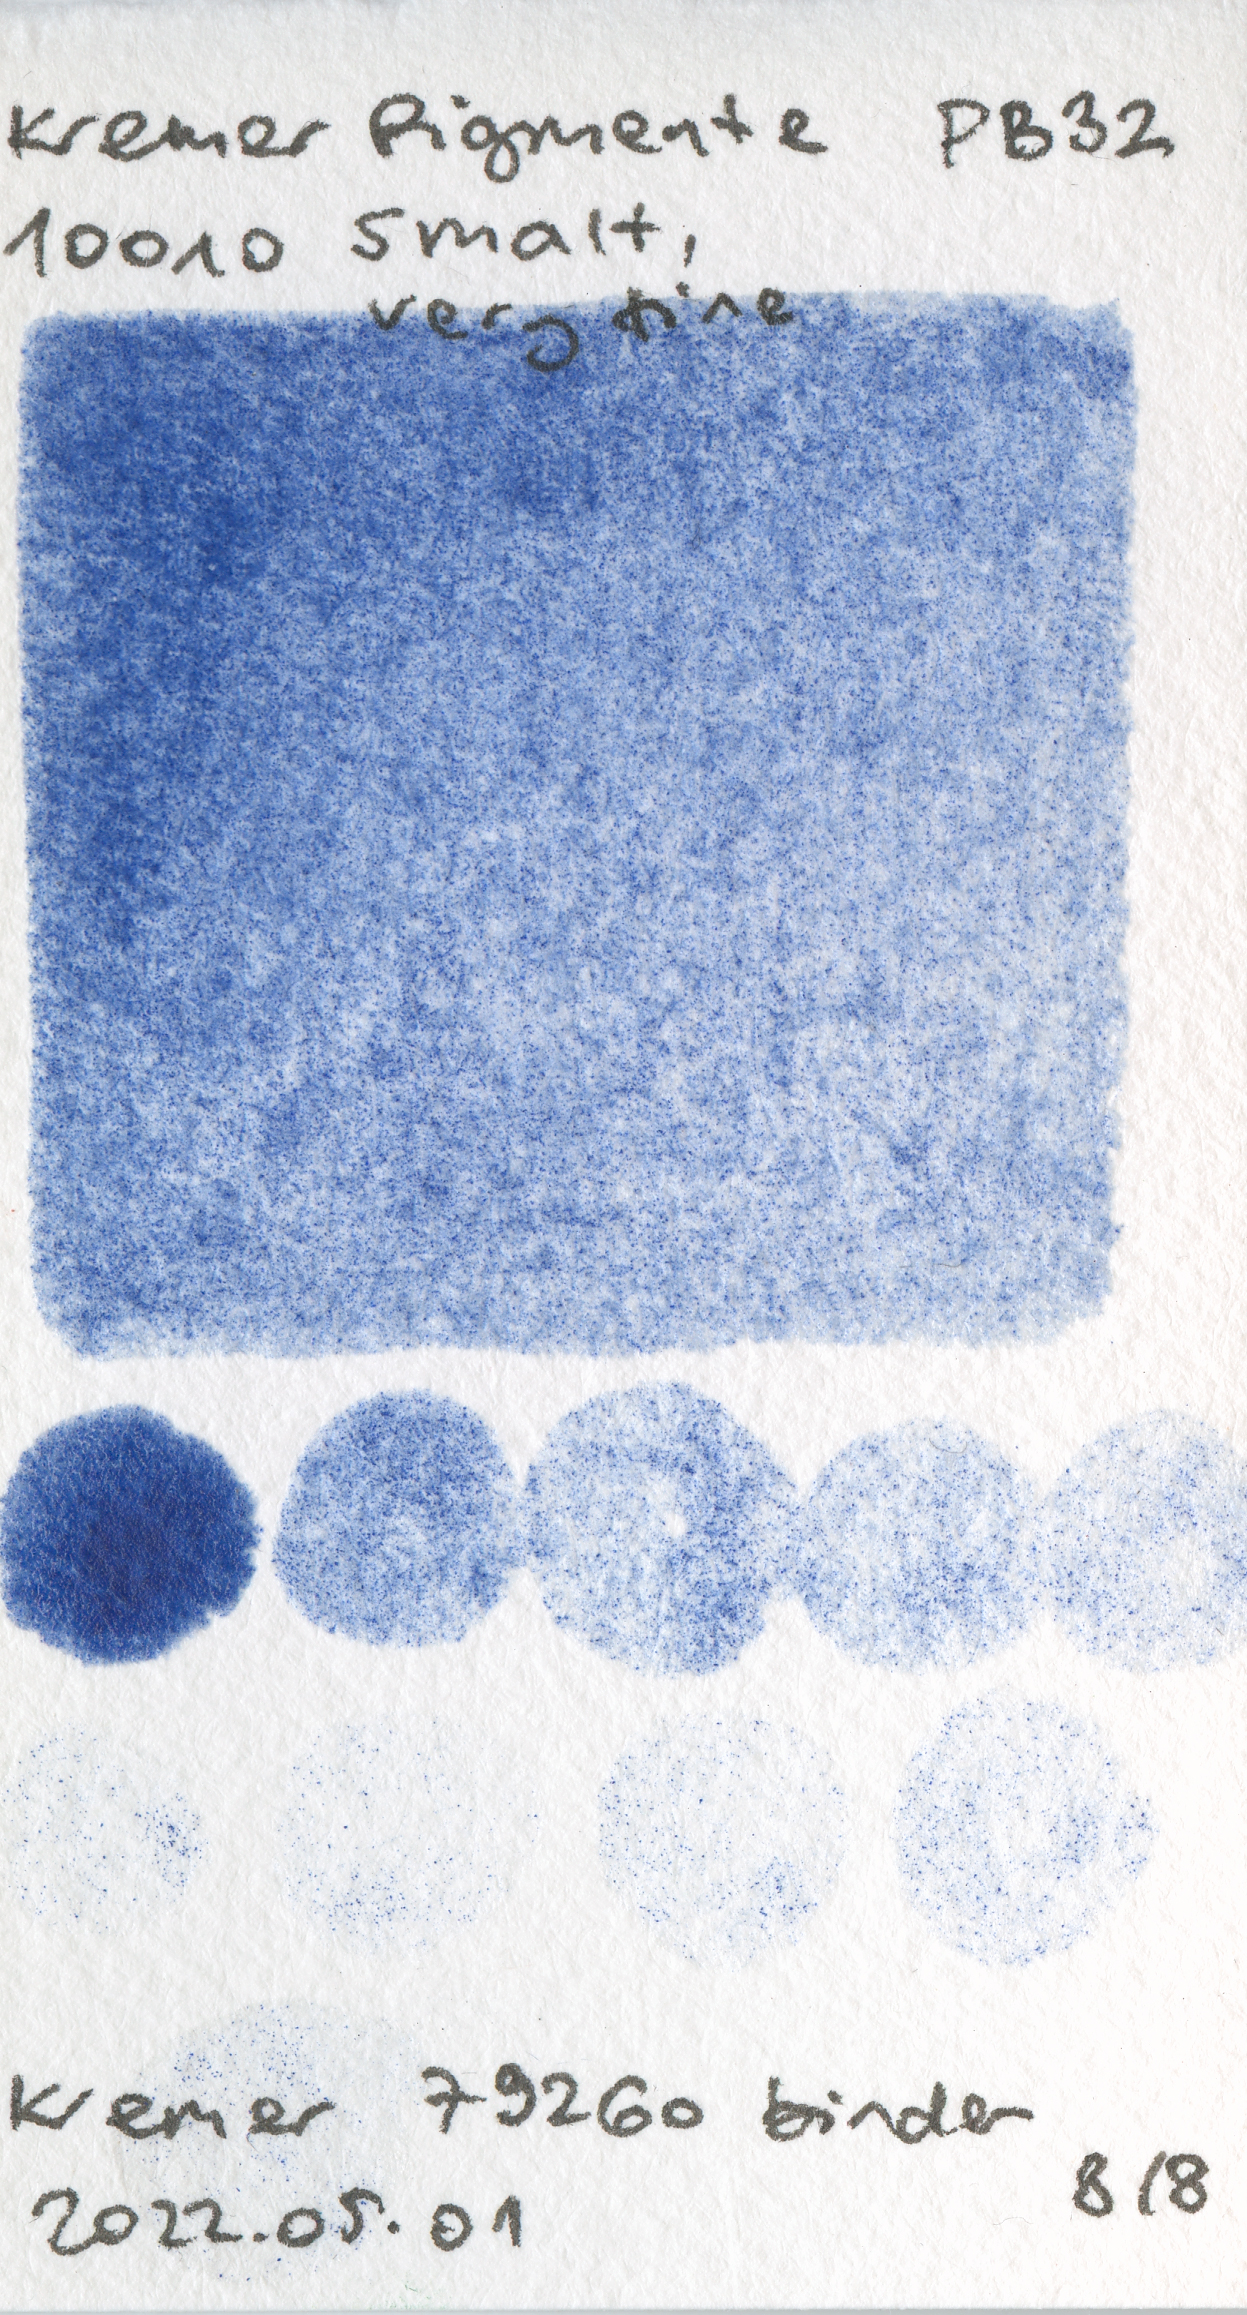 Kremer Pigmente [Dry] Pigments 10010 Smalt, very fine (Cobalt silicate) PB32 watercolor swatch